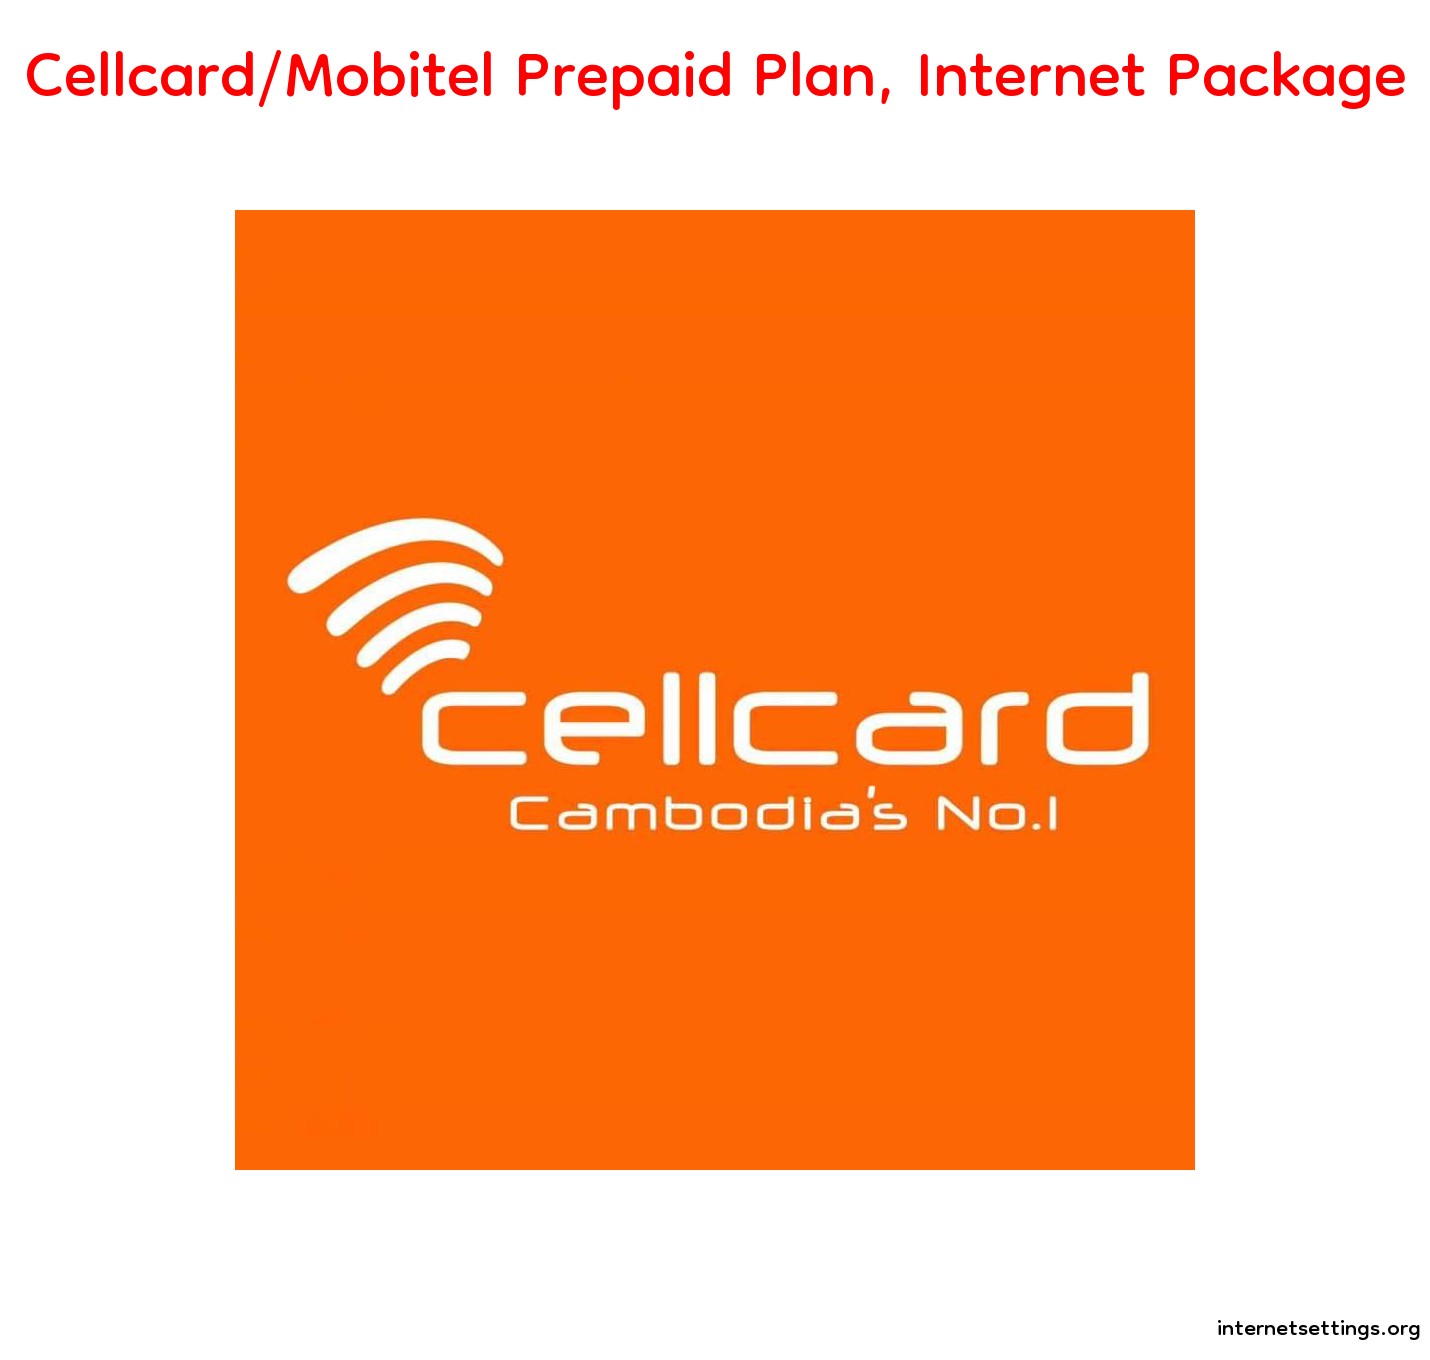 Cellcard Mobitel Prepaid Plan, Internet Package